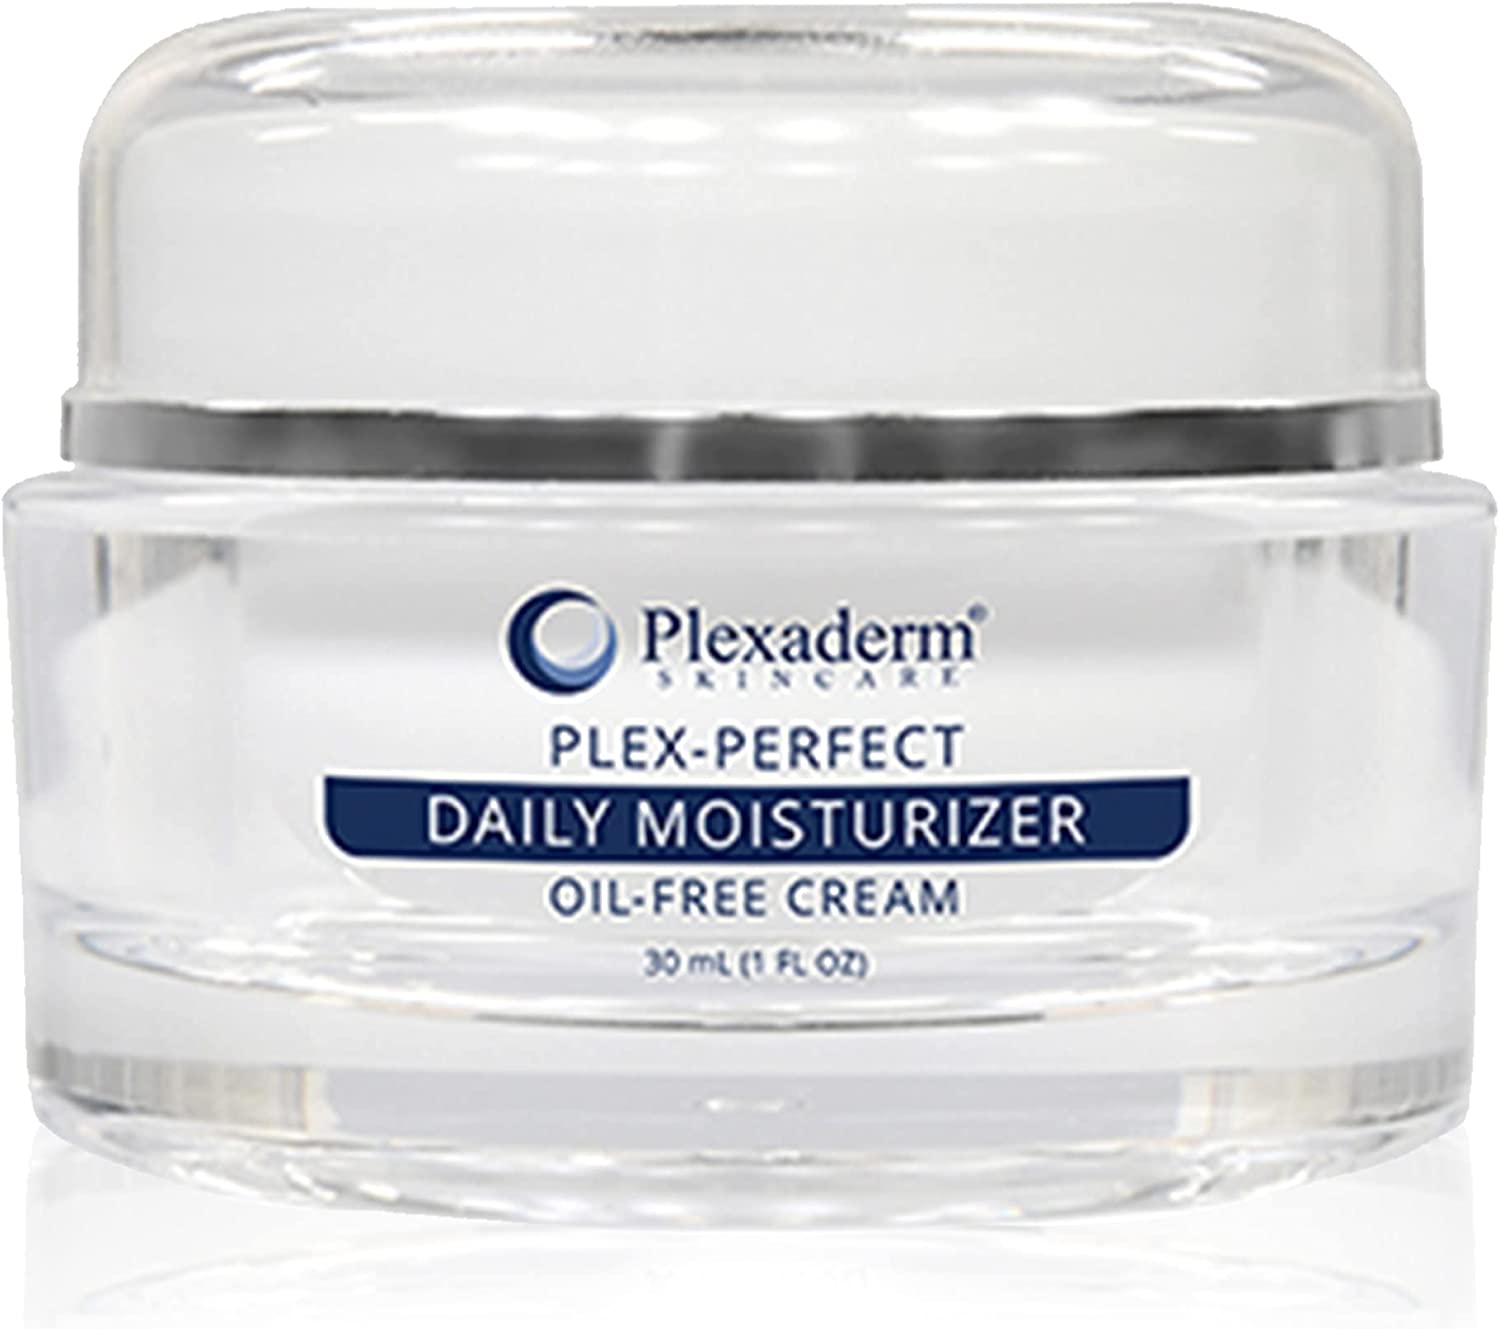 Plexaderm Plex-Perfect Daily Moisturizer Oil Free Cream with Hydrate-6 Complex, 1 oz